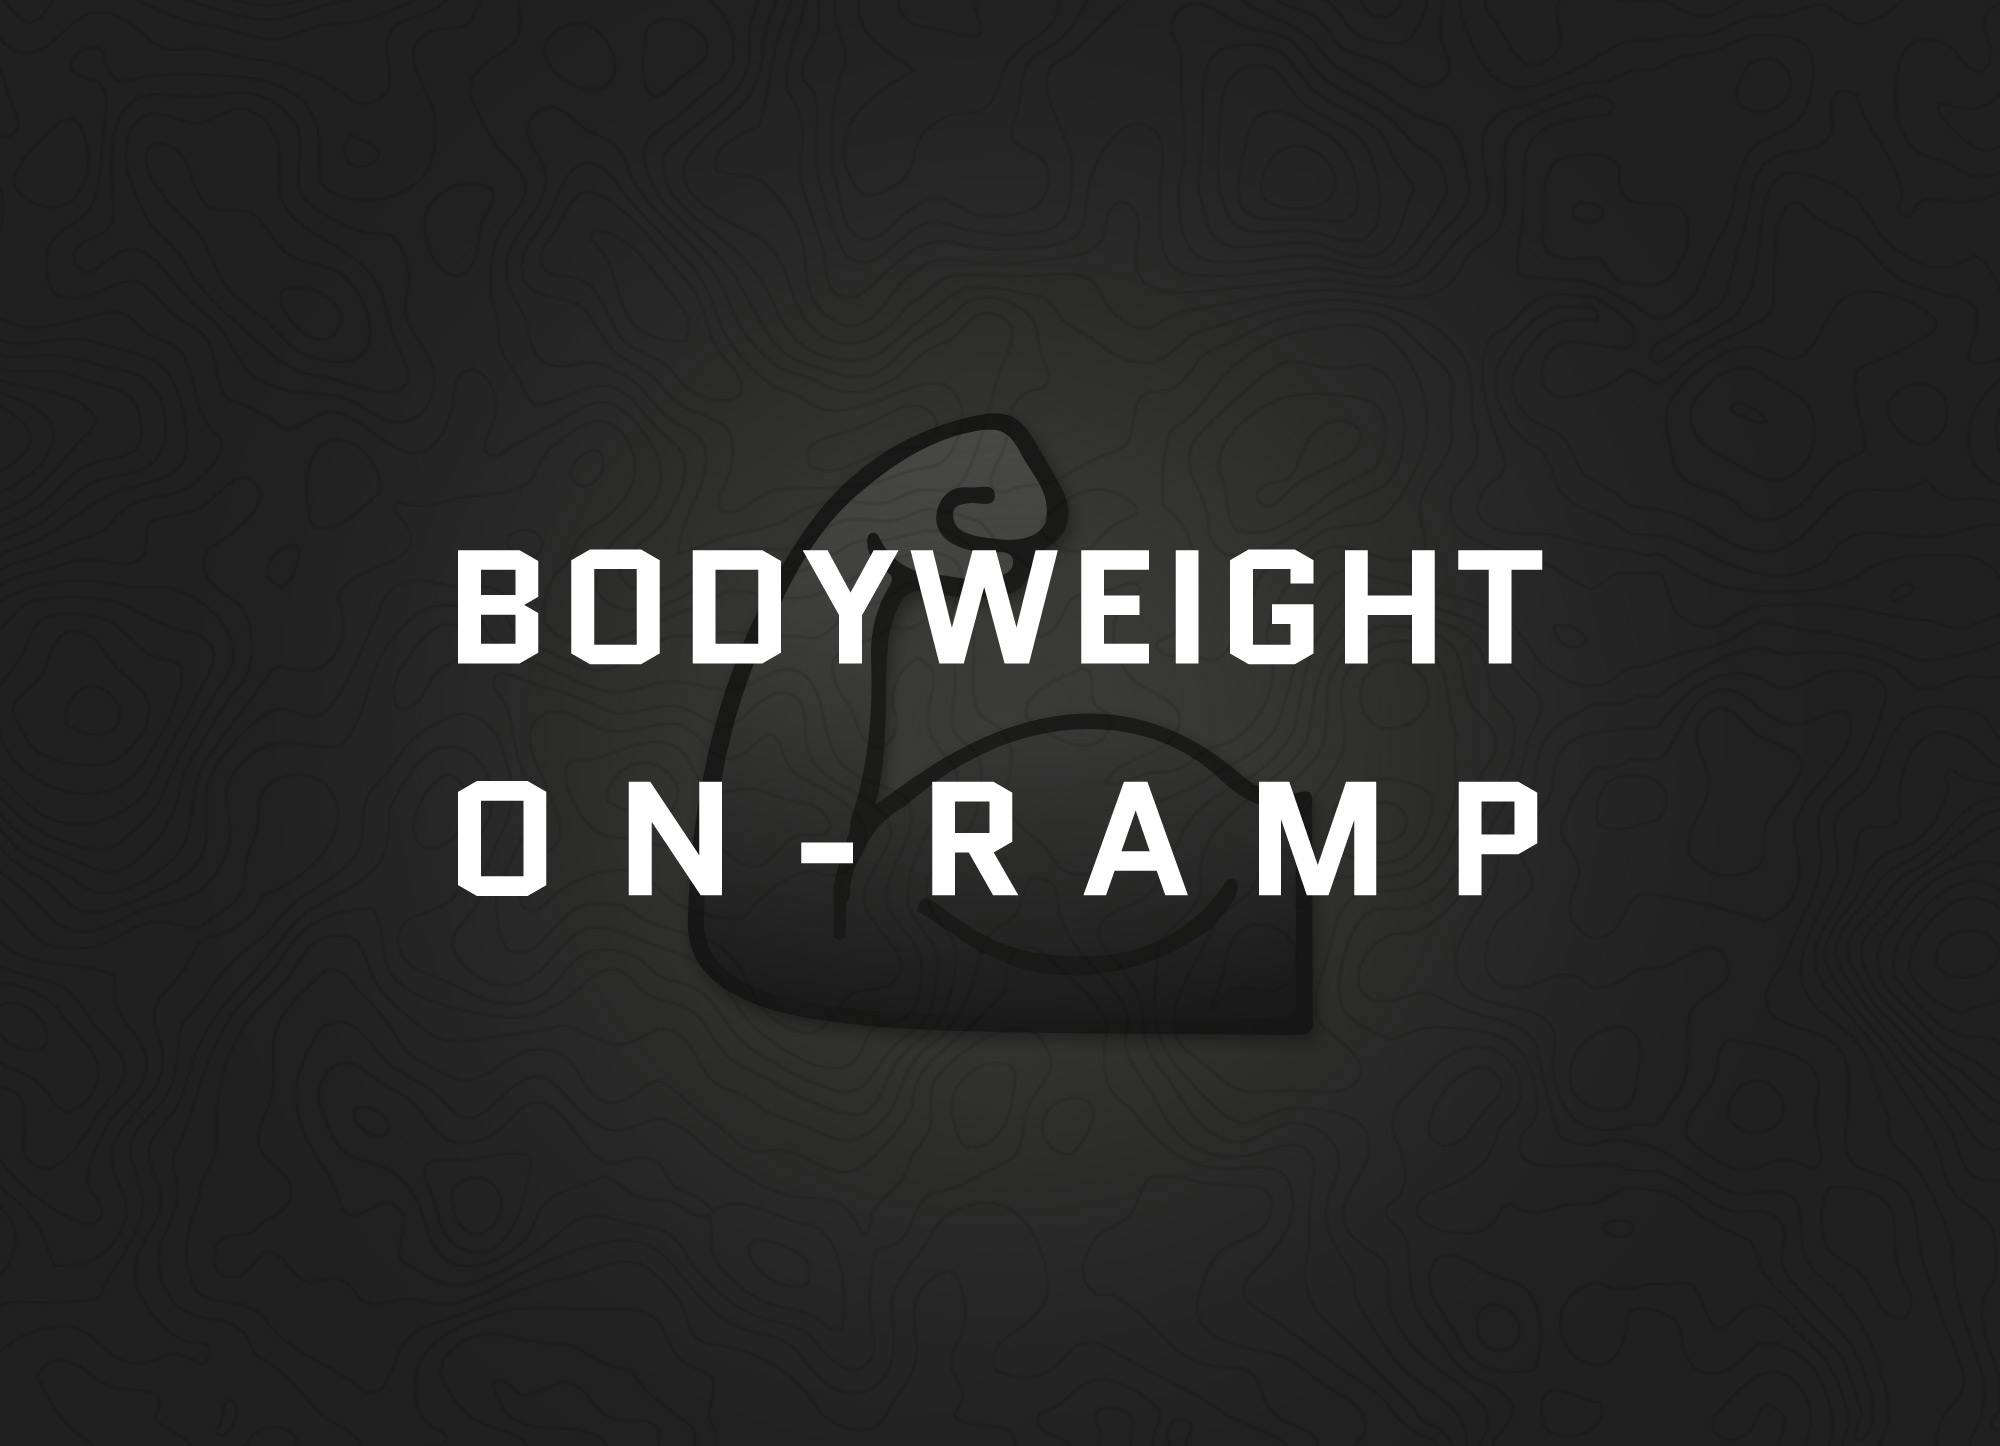 Bodyweight On-ramp